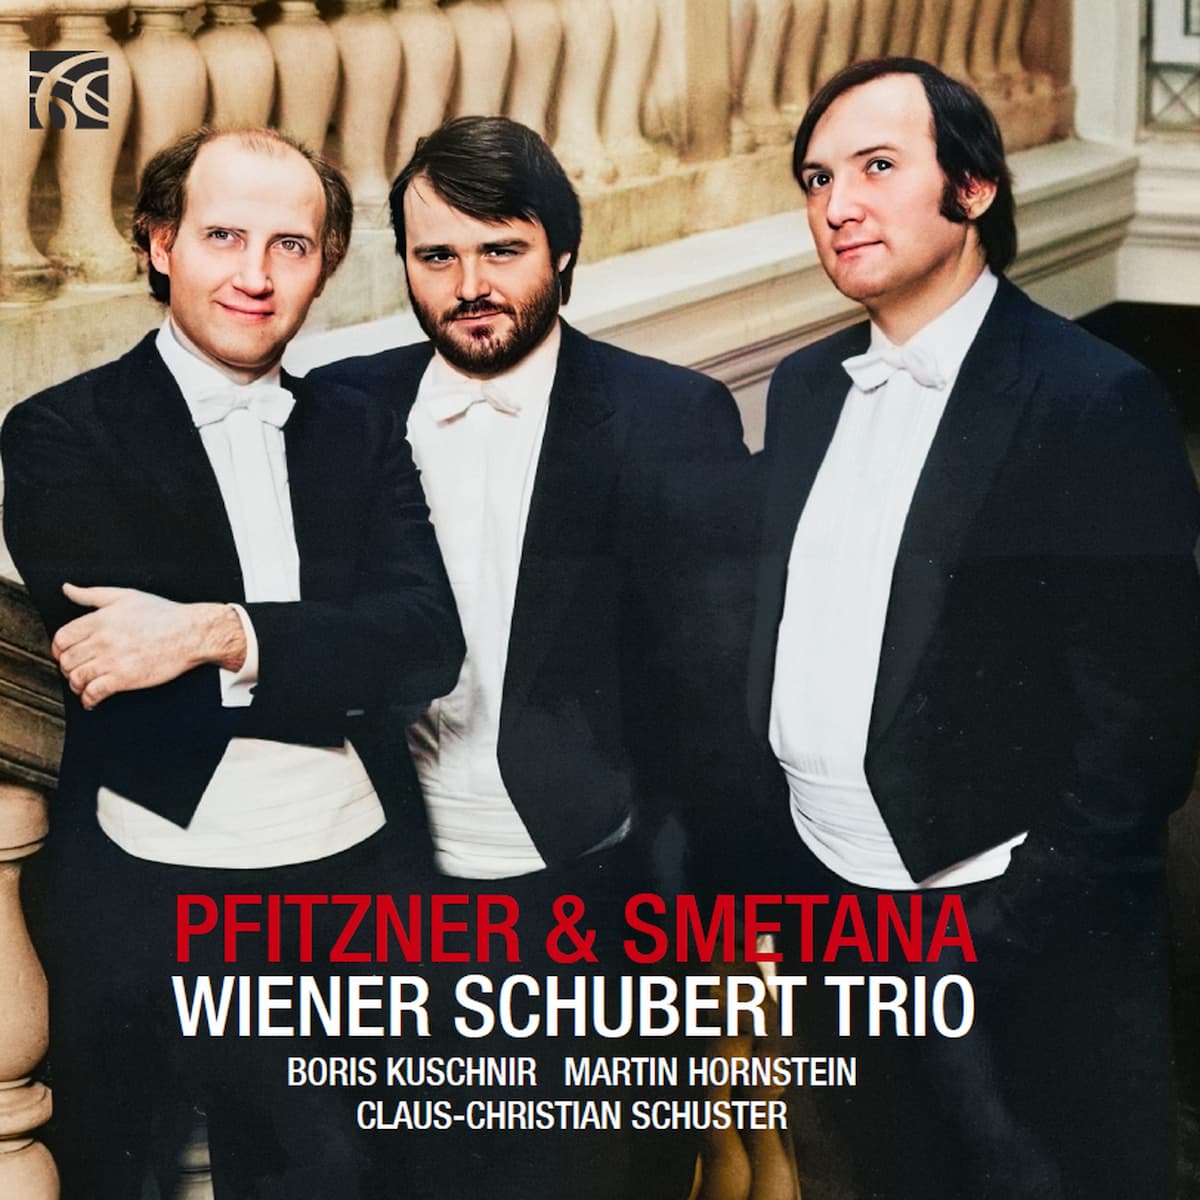 Wiener Schubert Trio's recording of Pfitzner and Smetana